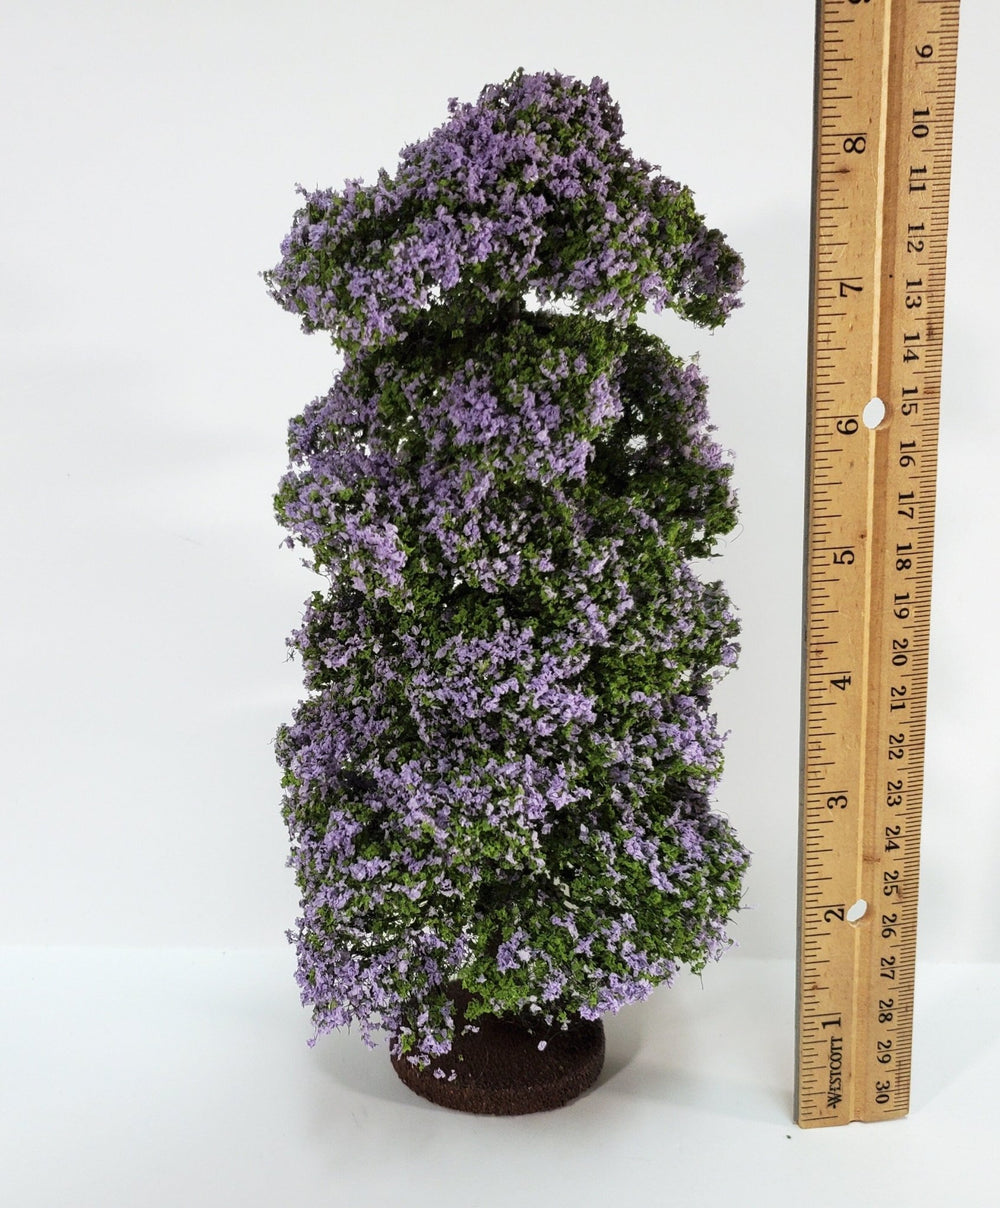 Miniature Flowering Tree or Shrub Large Purple Lilac on Base Scenery 8" Tall - Miniature Crush